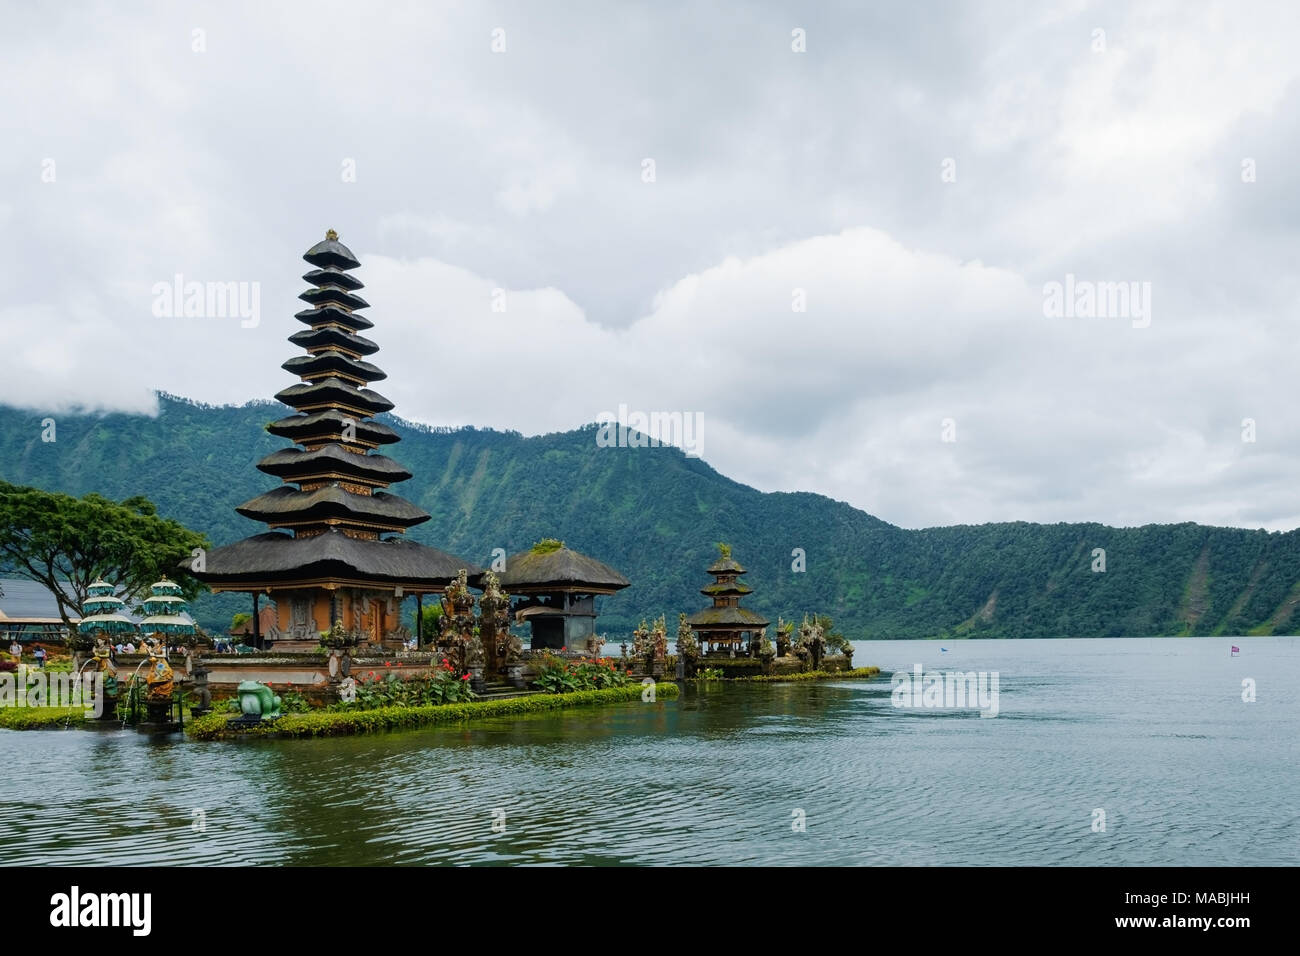 Bali, Indonesia -January 12, 2018: Famous temple near Gunung Batur volcano on Lake Batur Indonesia. Stock Photo